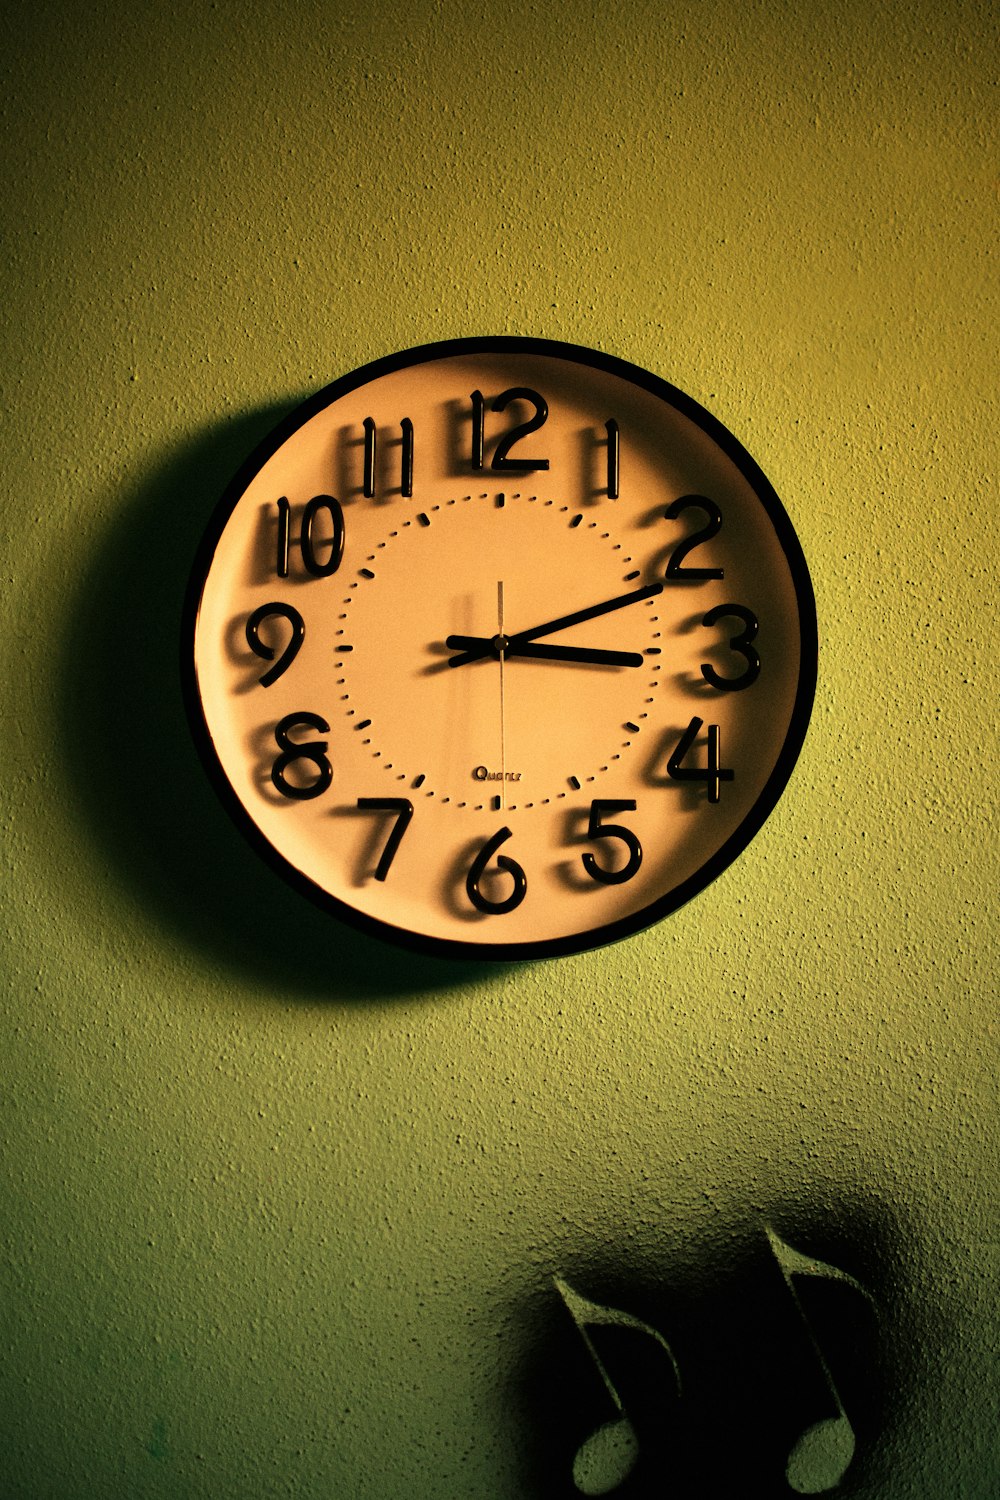 Reloj de pared analógico redondo negro a las 10:00